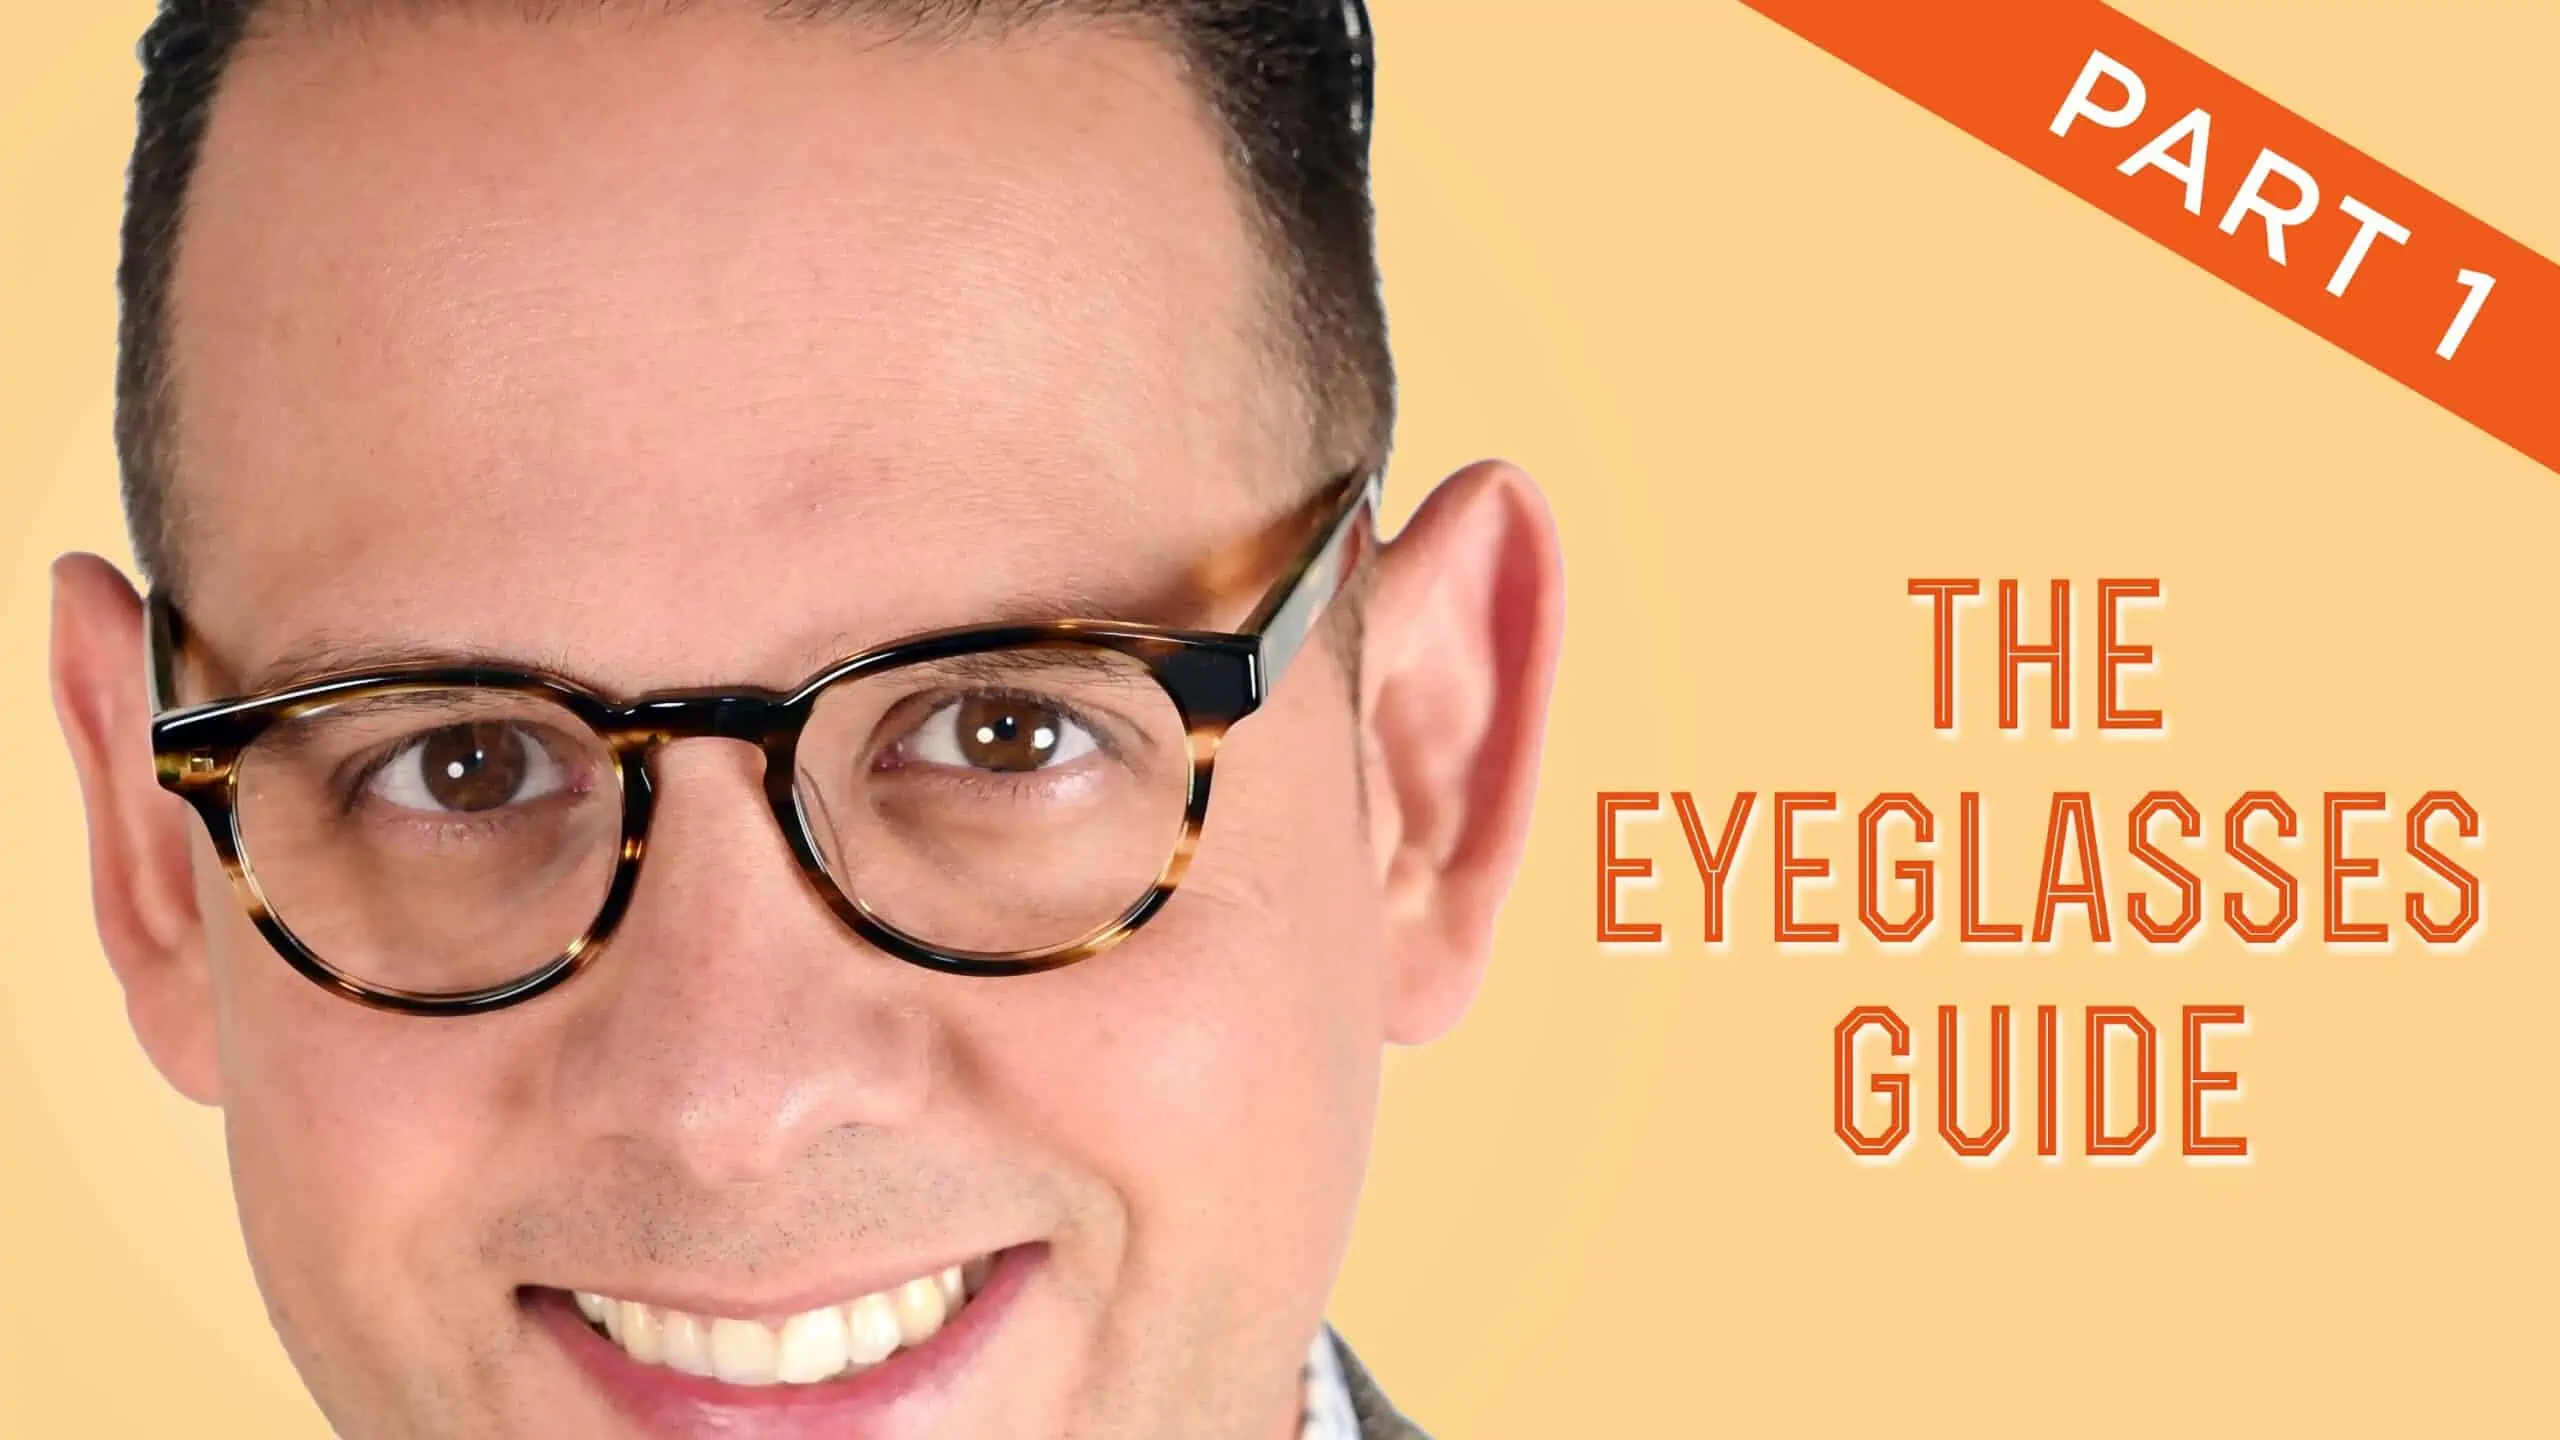 https://www.gentlemansgazette.com/wp-content/uploads/2018/09/eyeglasses-guide-part-1-scaled.webp